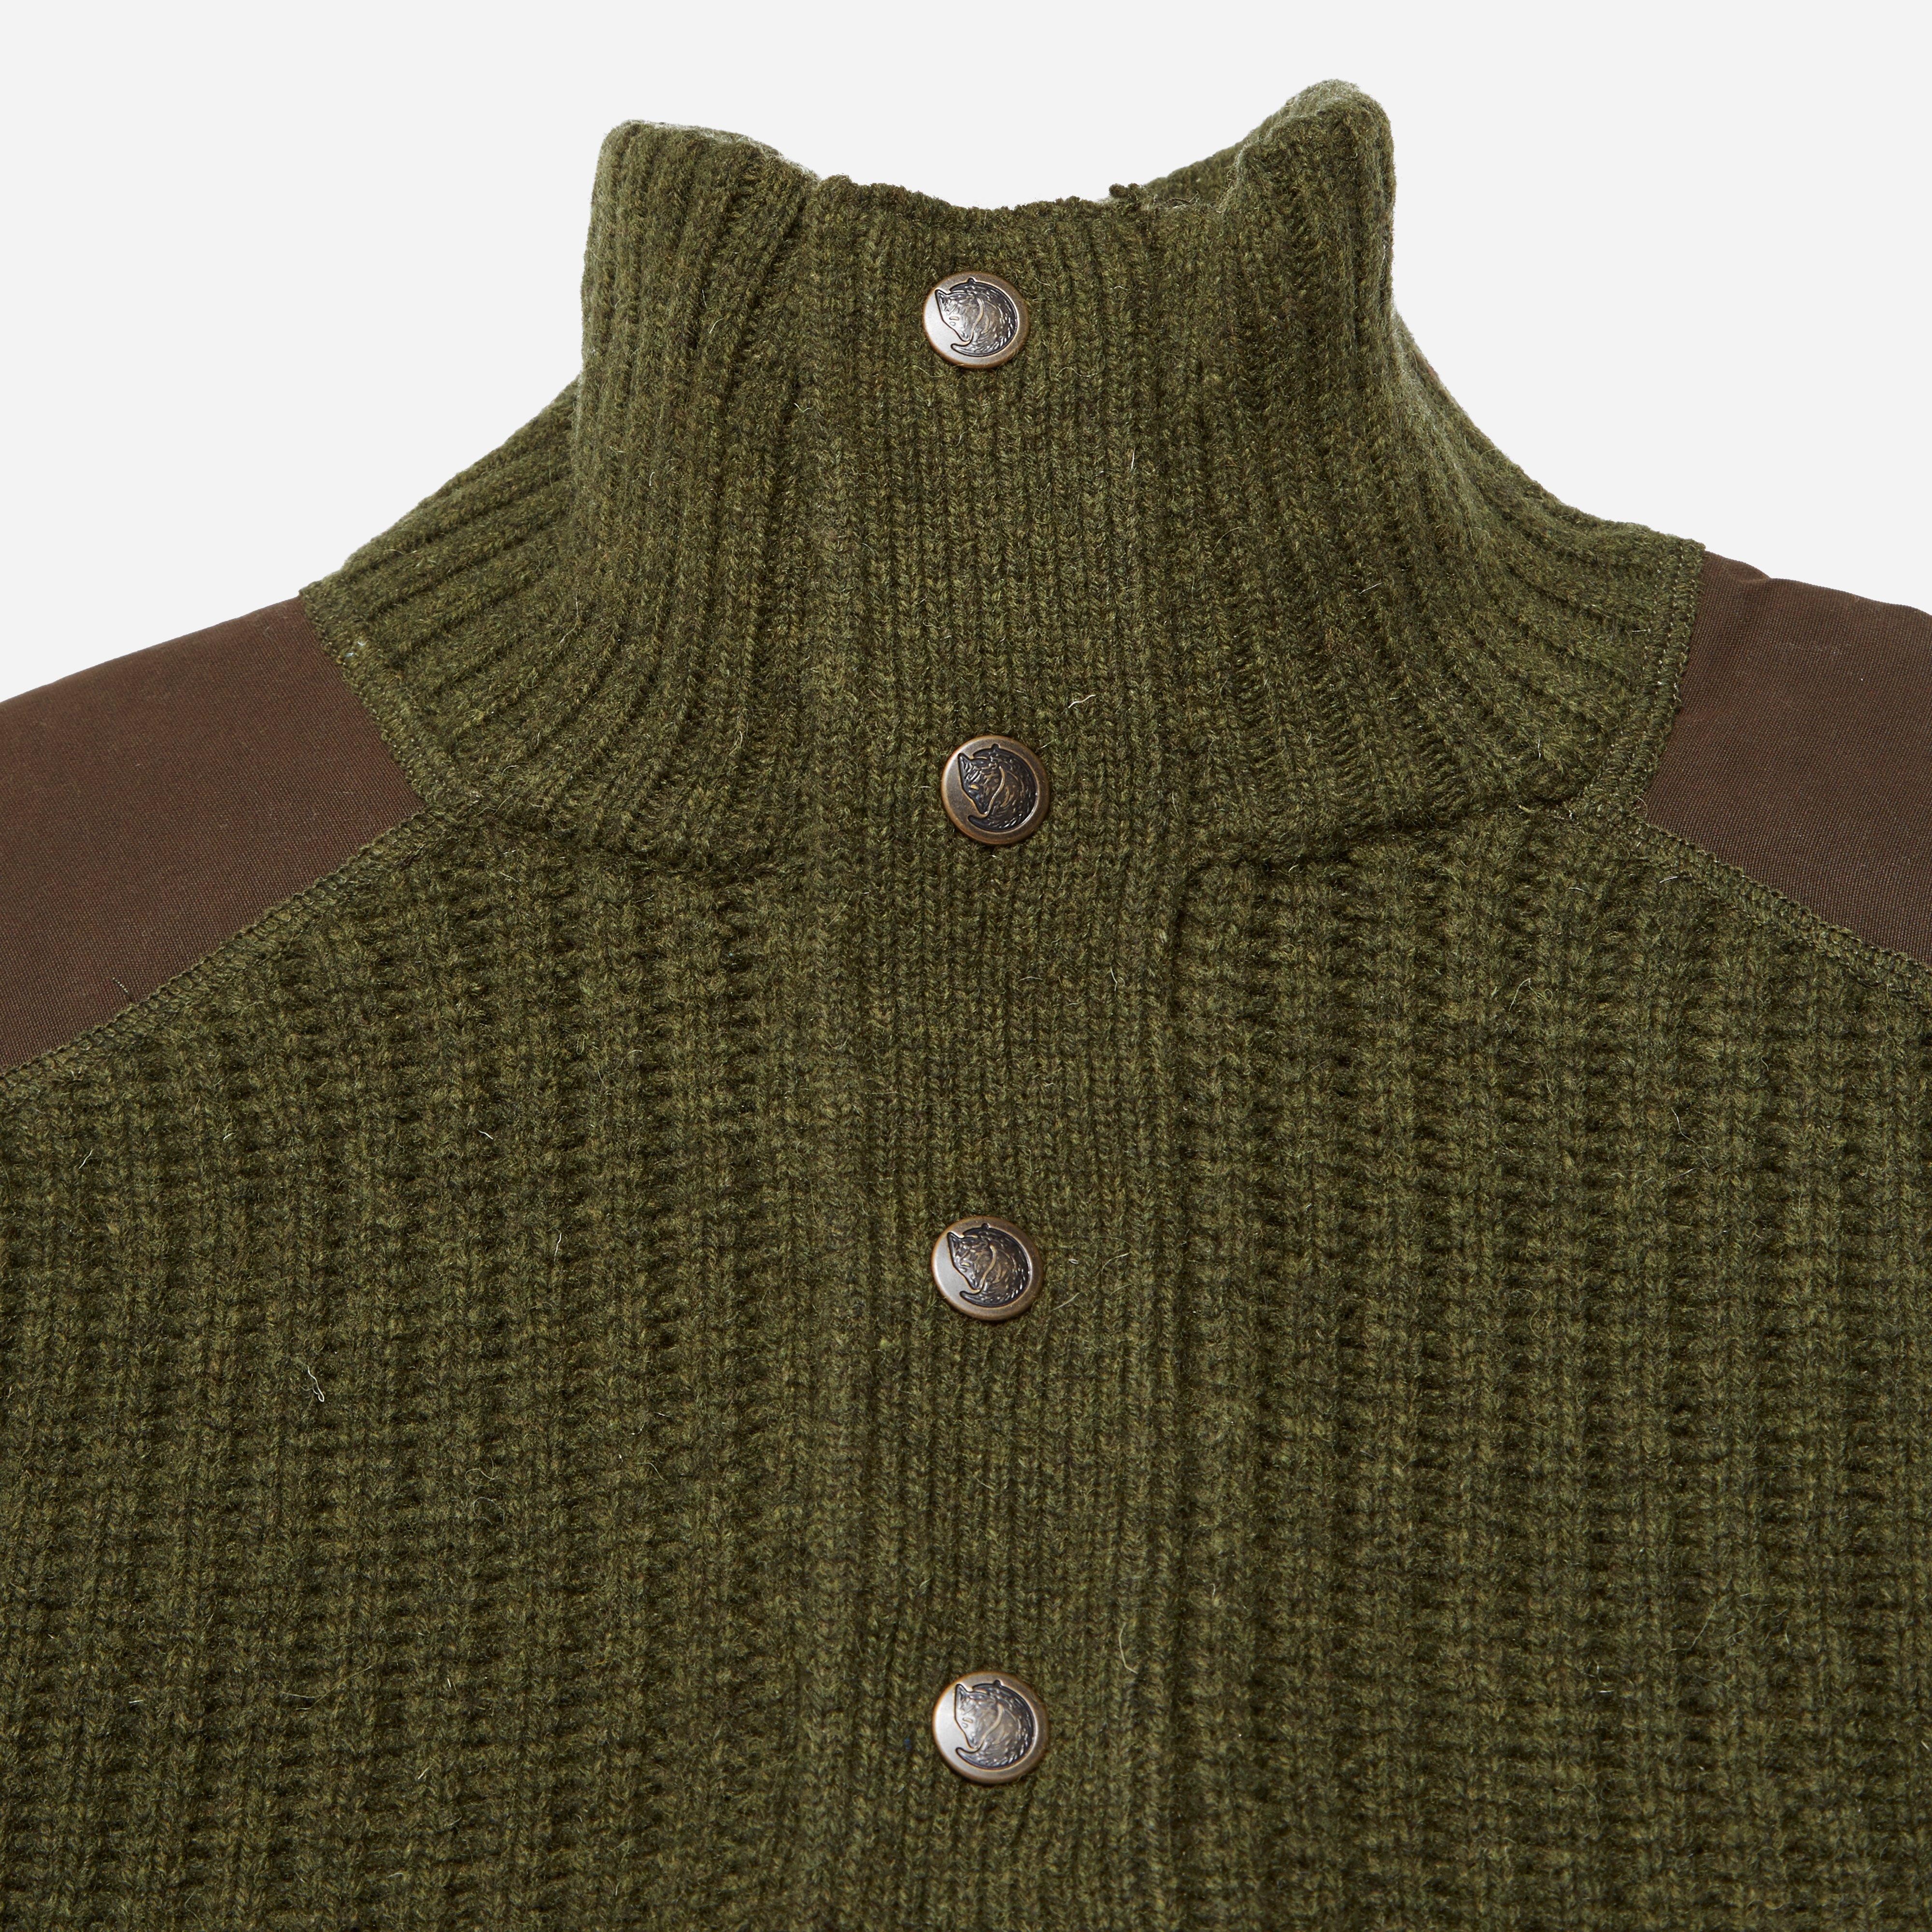 Lyst - Fjallraven Varmland T-neck Sweater in Green for Men